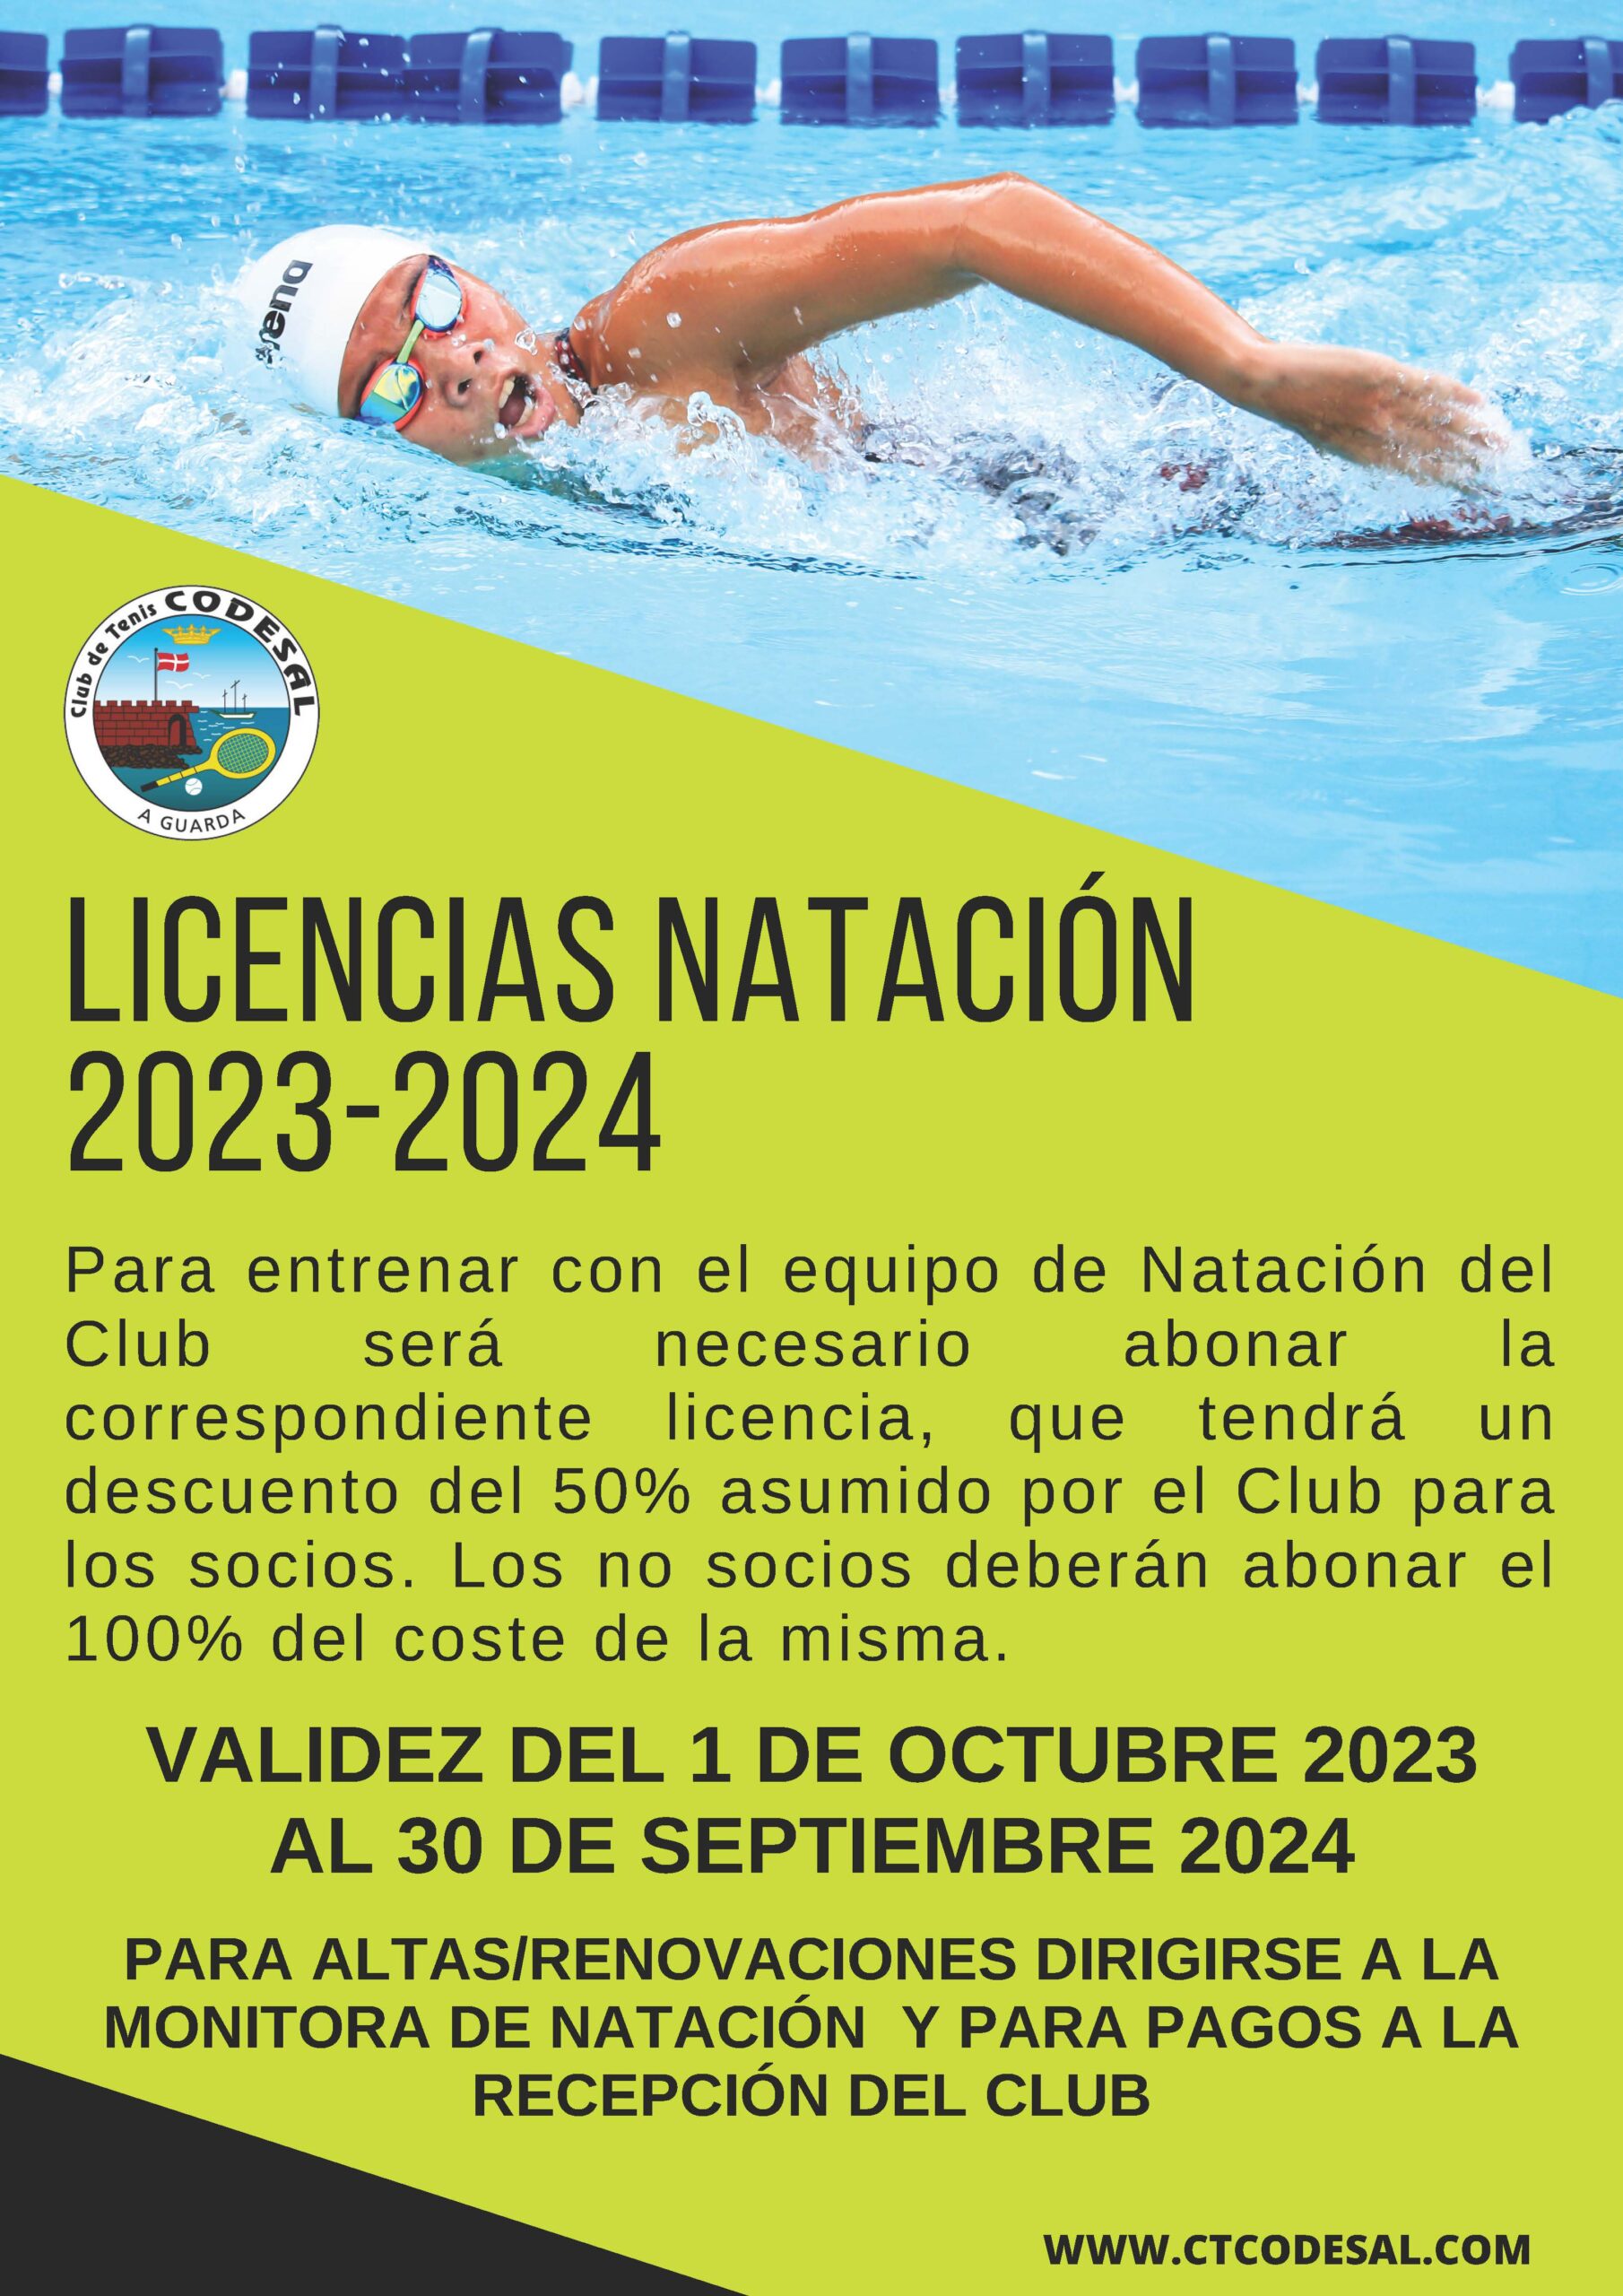 Licencias natación 2023-2024